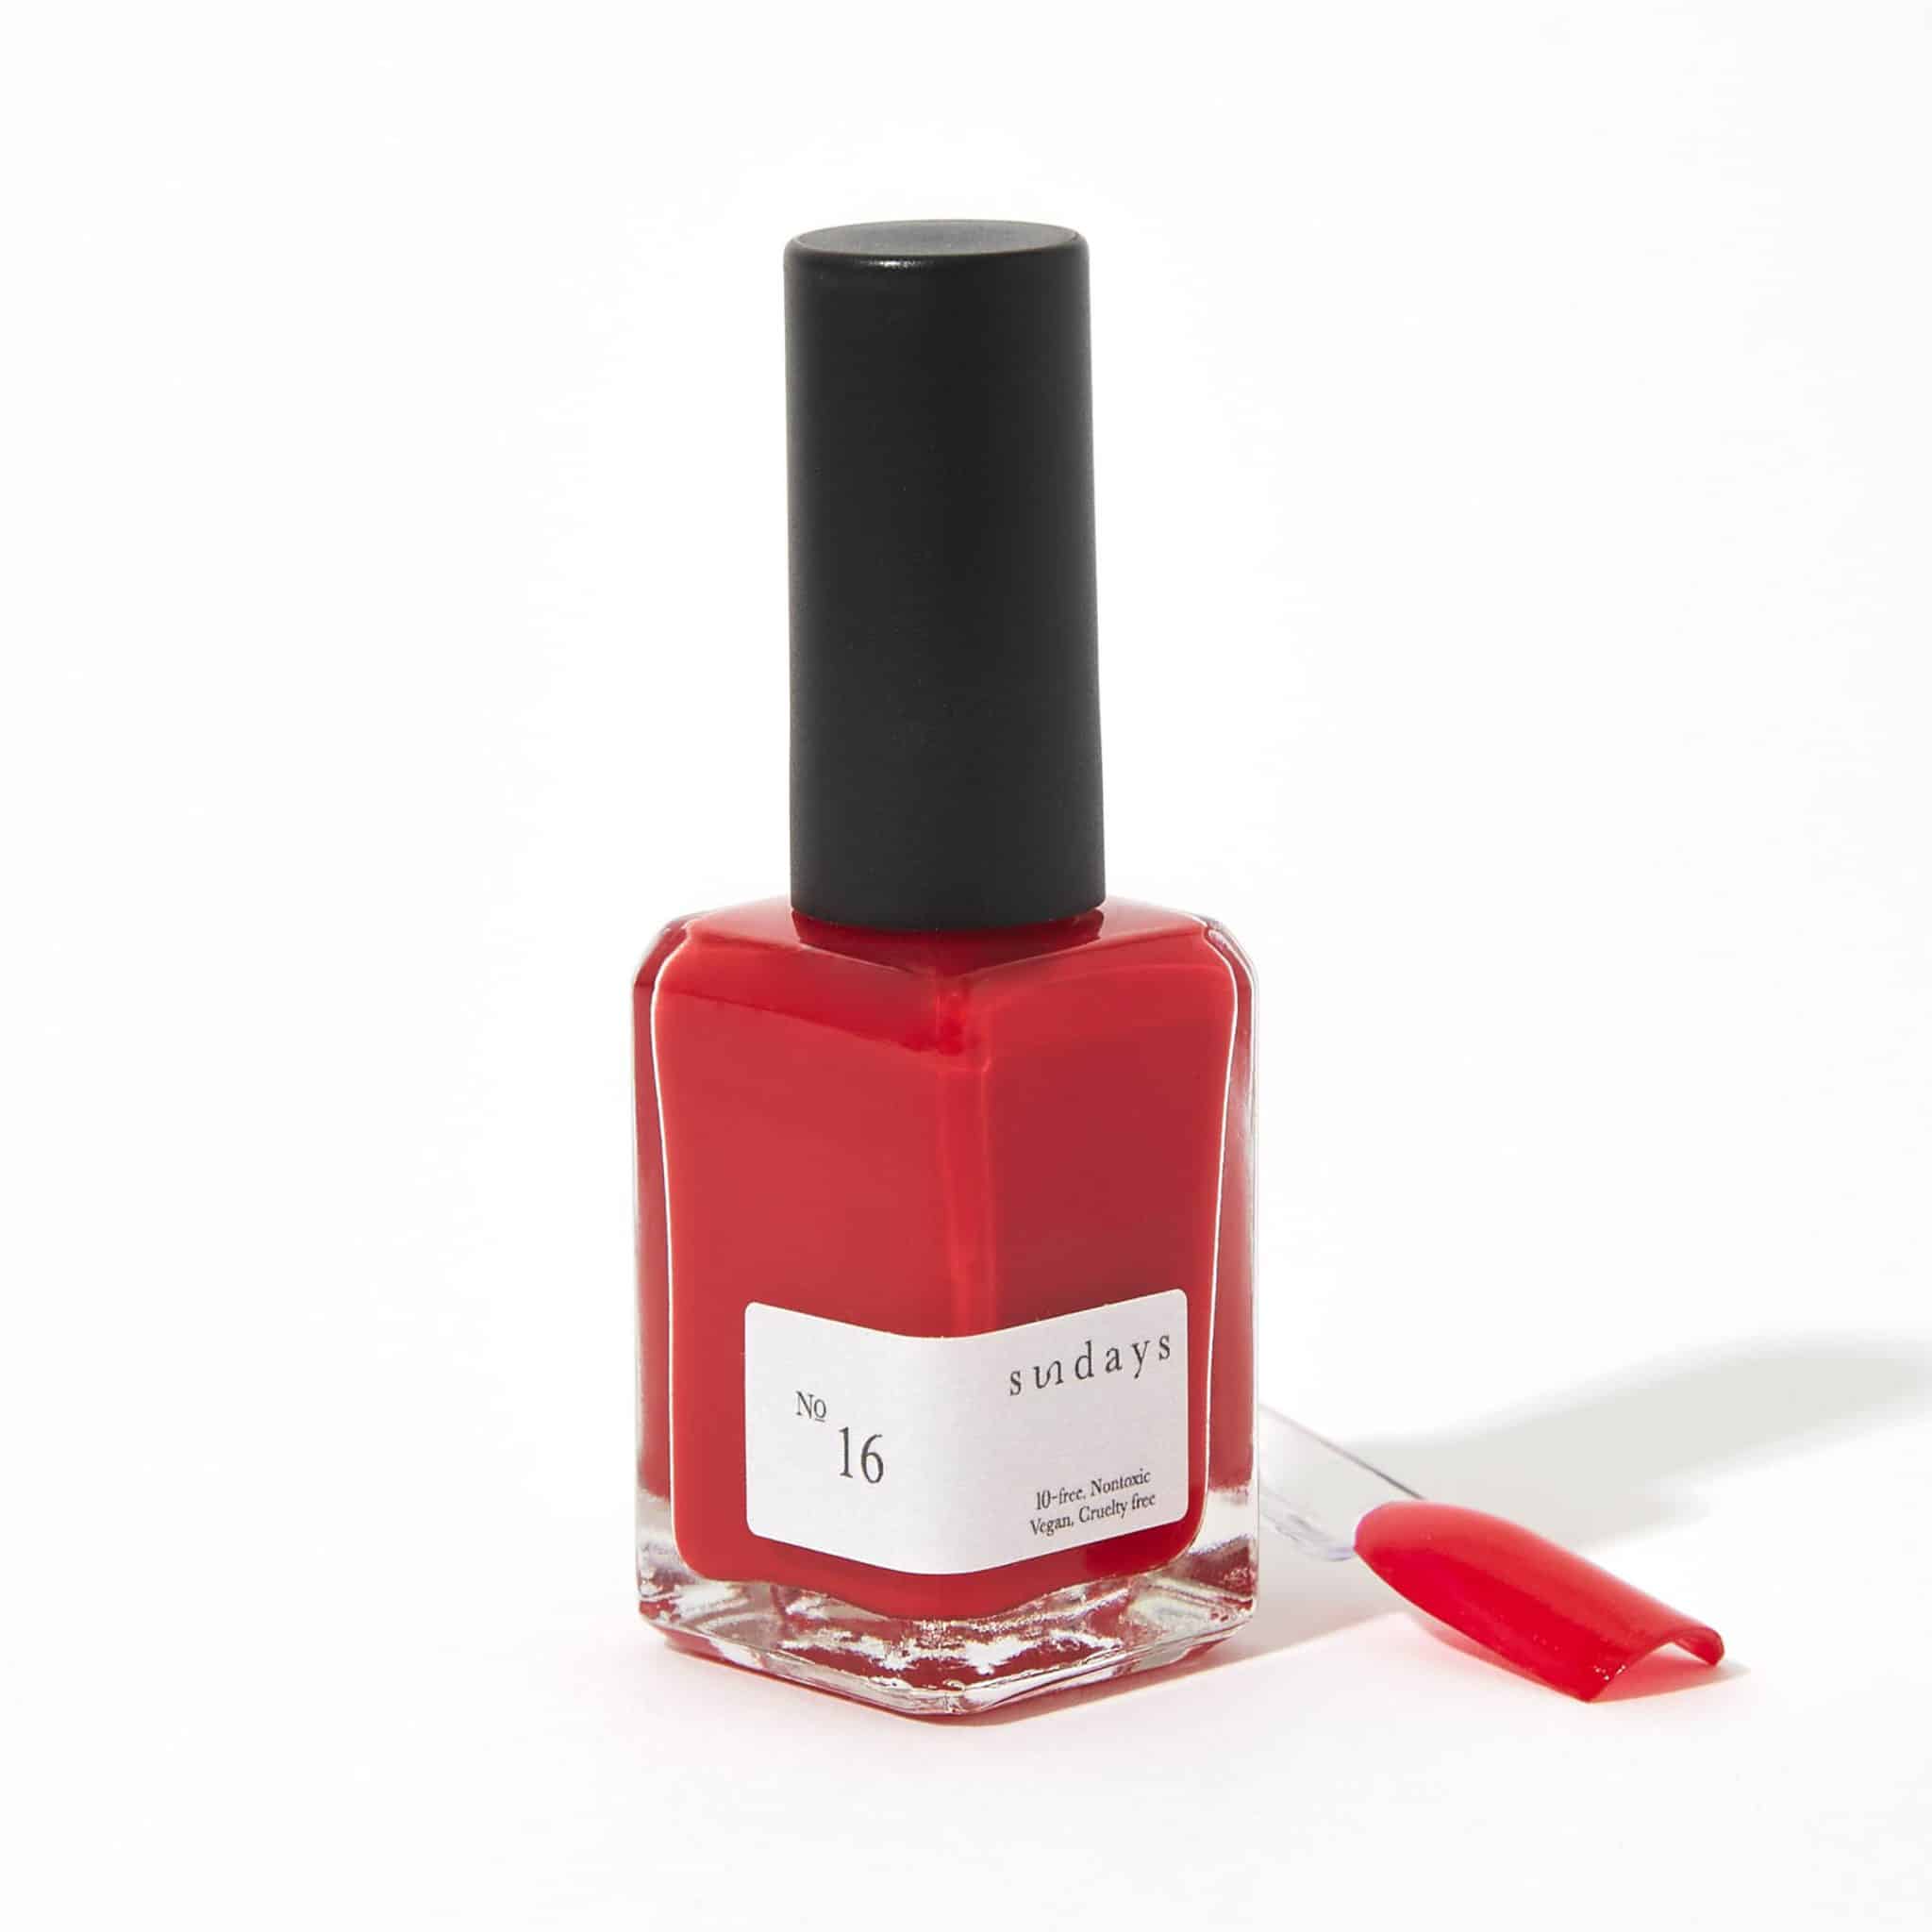 Non-toxic nail polish in red